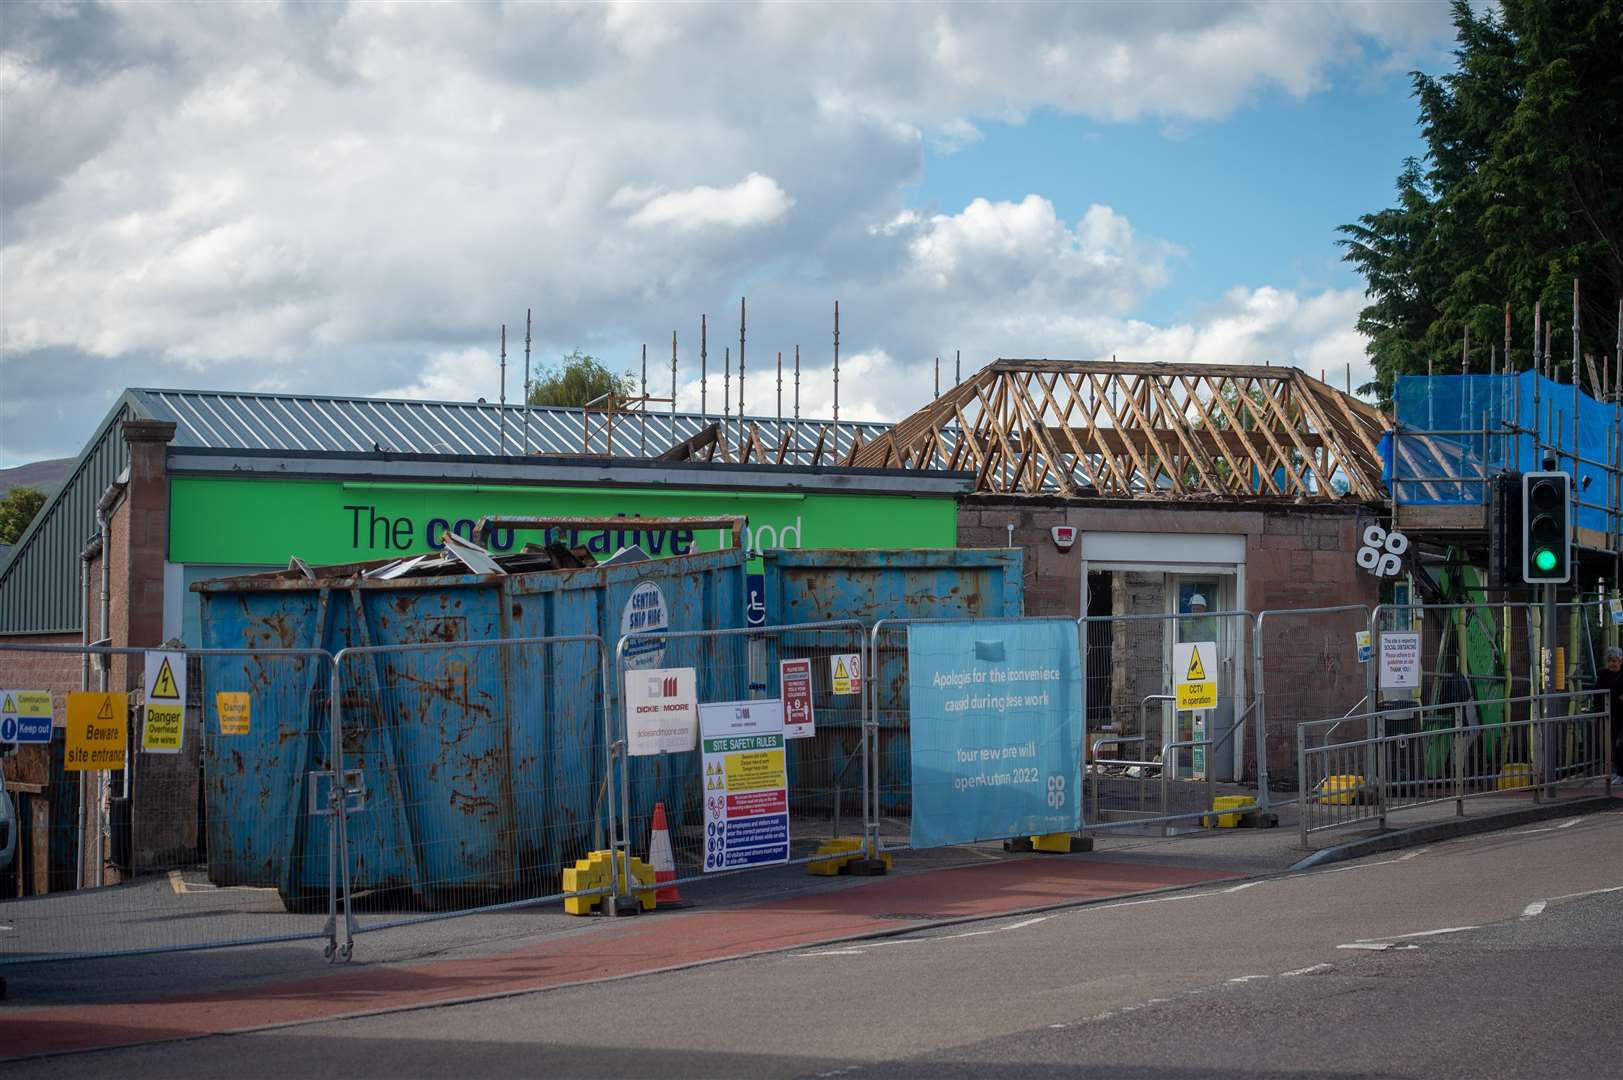 The former Coop premises being dismantled